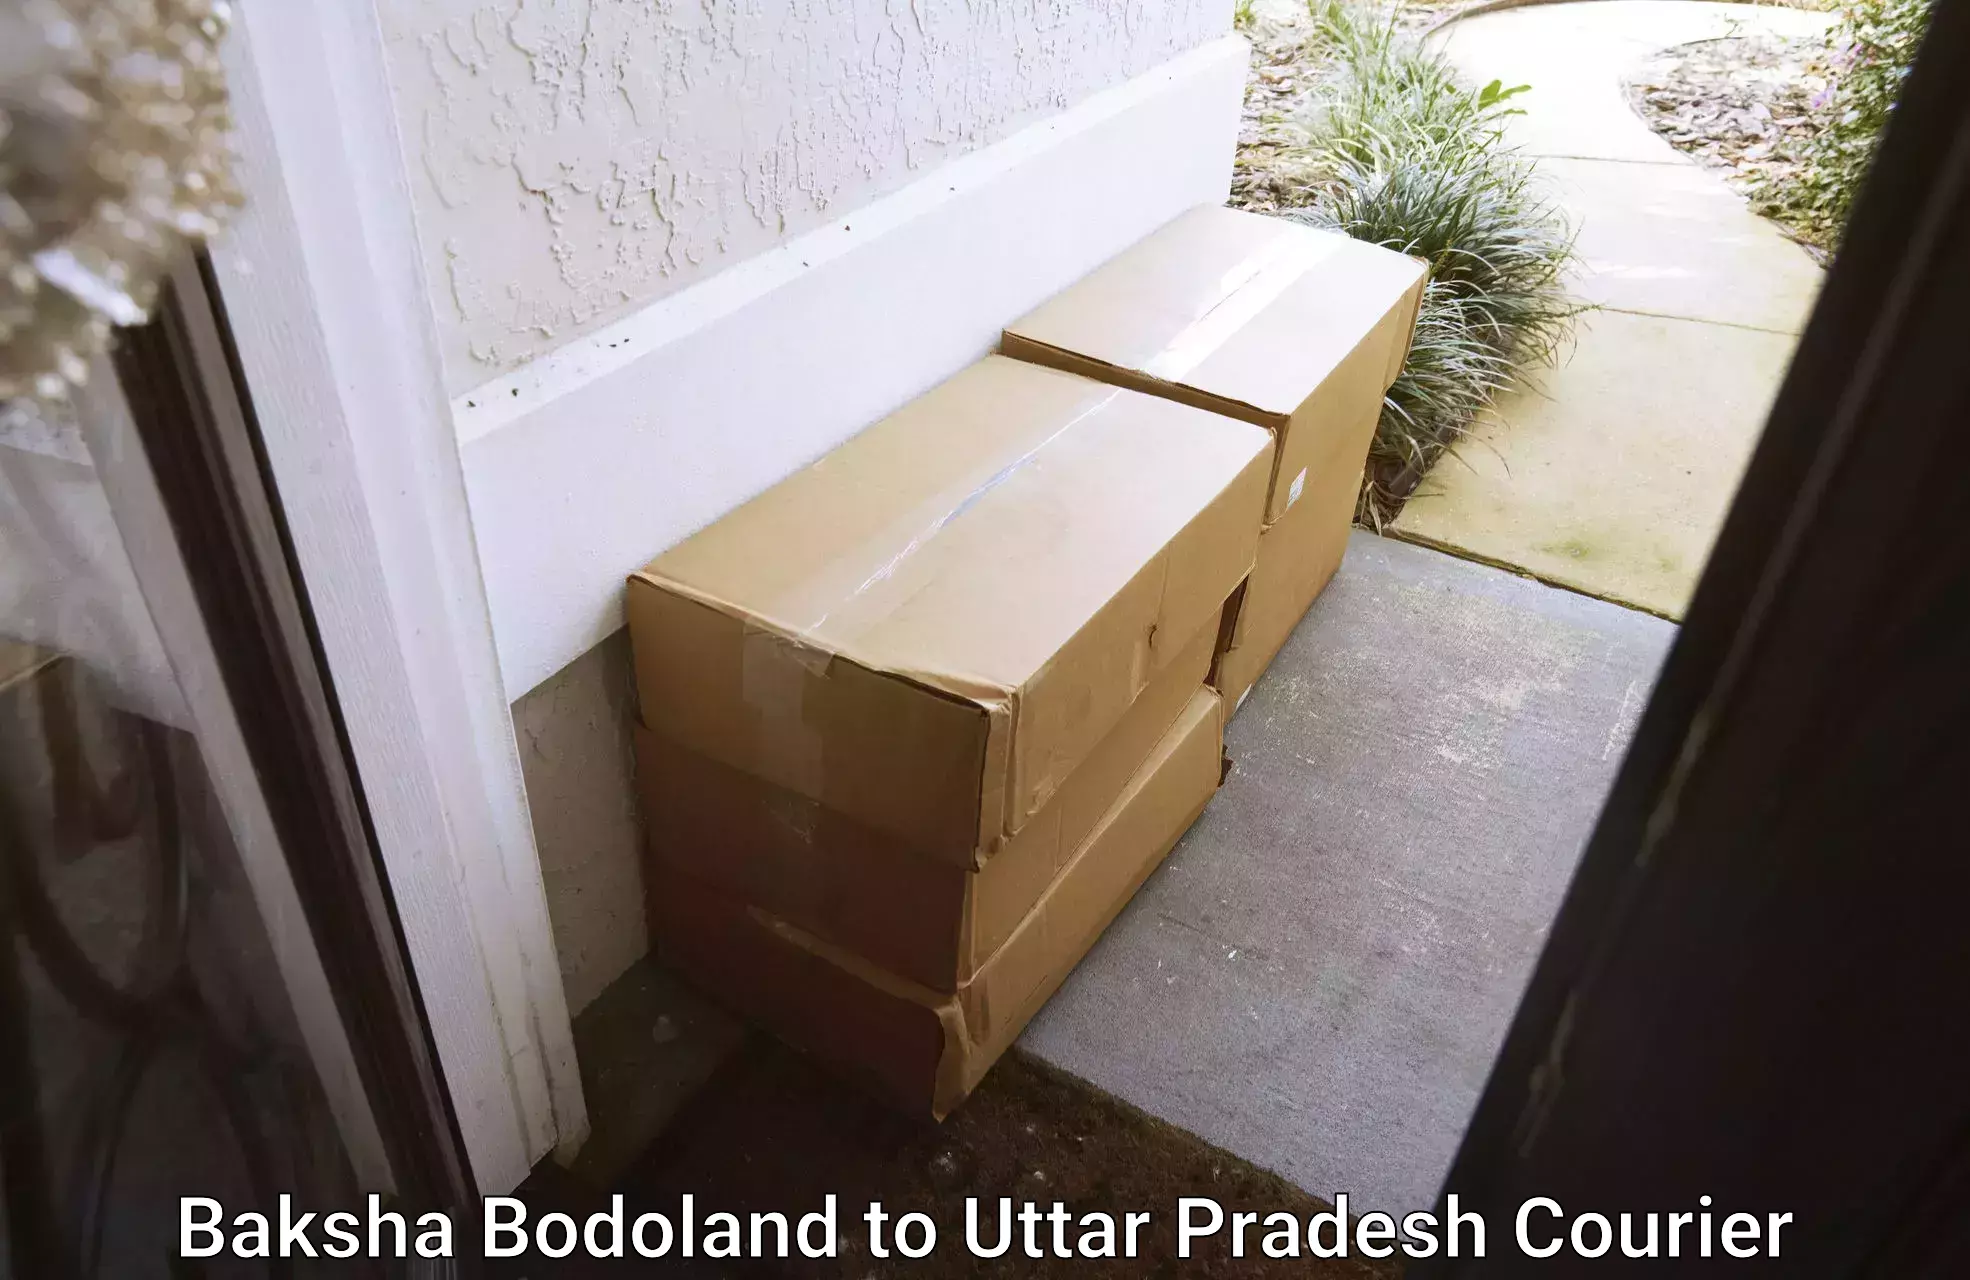 Speedy delivery service Baksha Bodoland to Rampur Maniharan